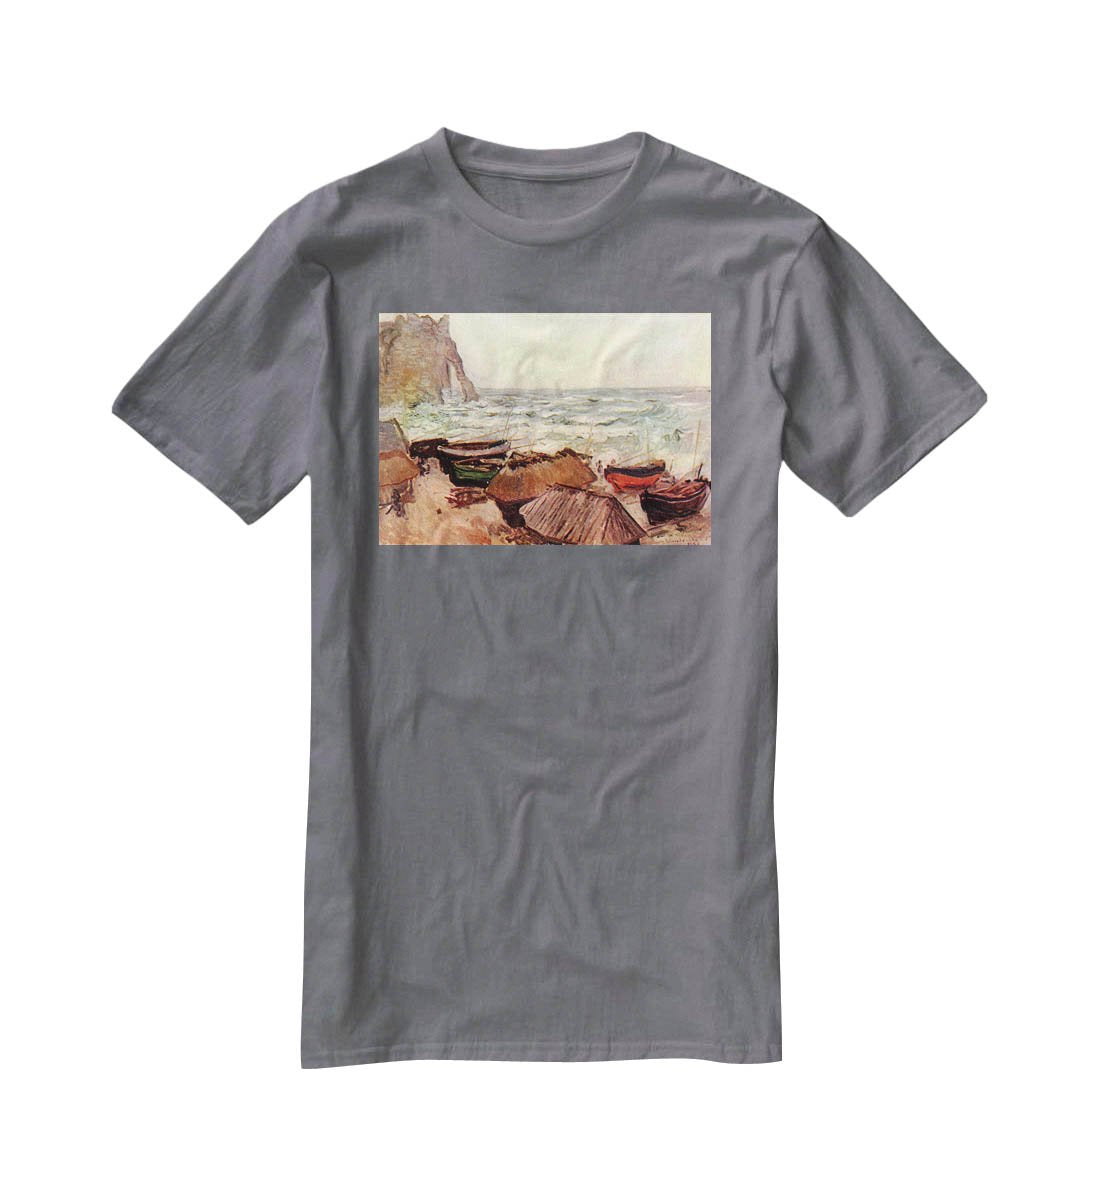 Durchbrochener rock at Etretat by Monet T-Shirt - Canvas Art Rocks - 3